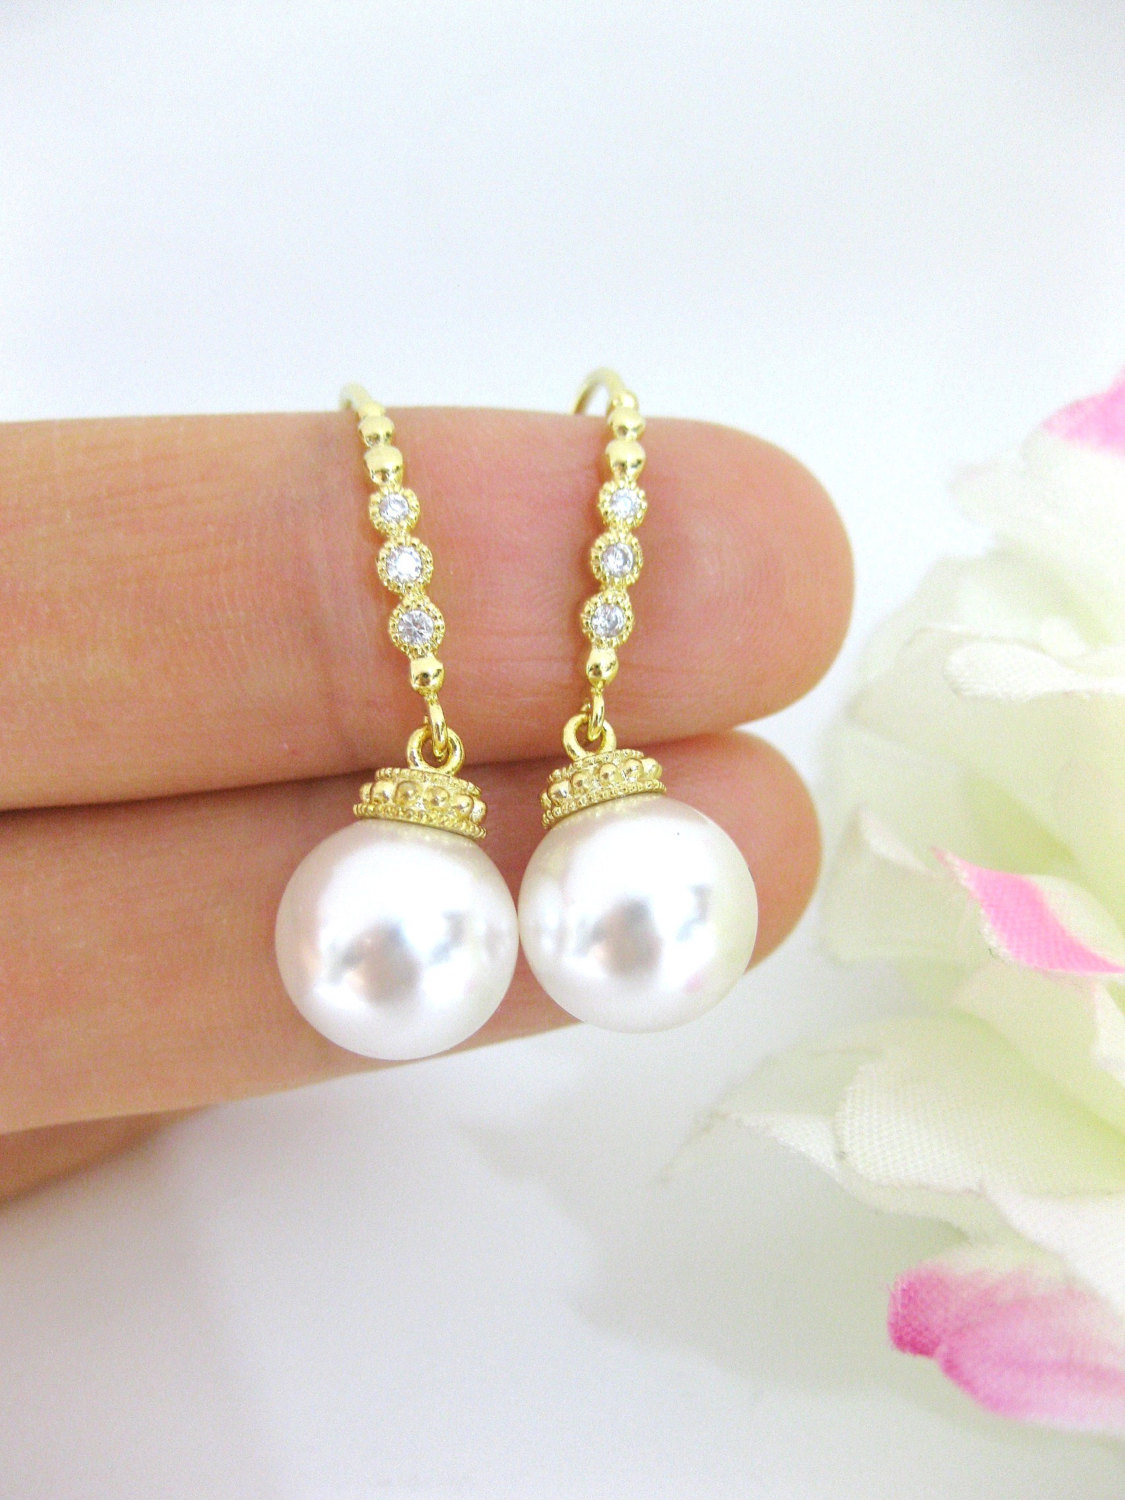 Bridal Pearl Earrings Wedding Pearl Earrings Swarovski 10mm Pearl Gold Earrings Wedding Jewelry Bridesmaid Gift Dangle Drop Earrings (e132)